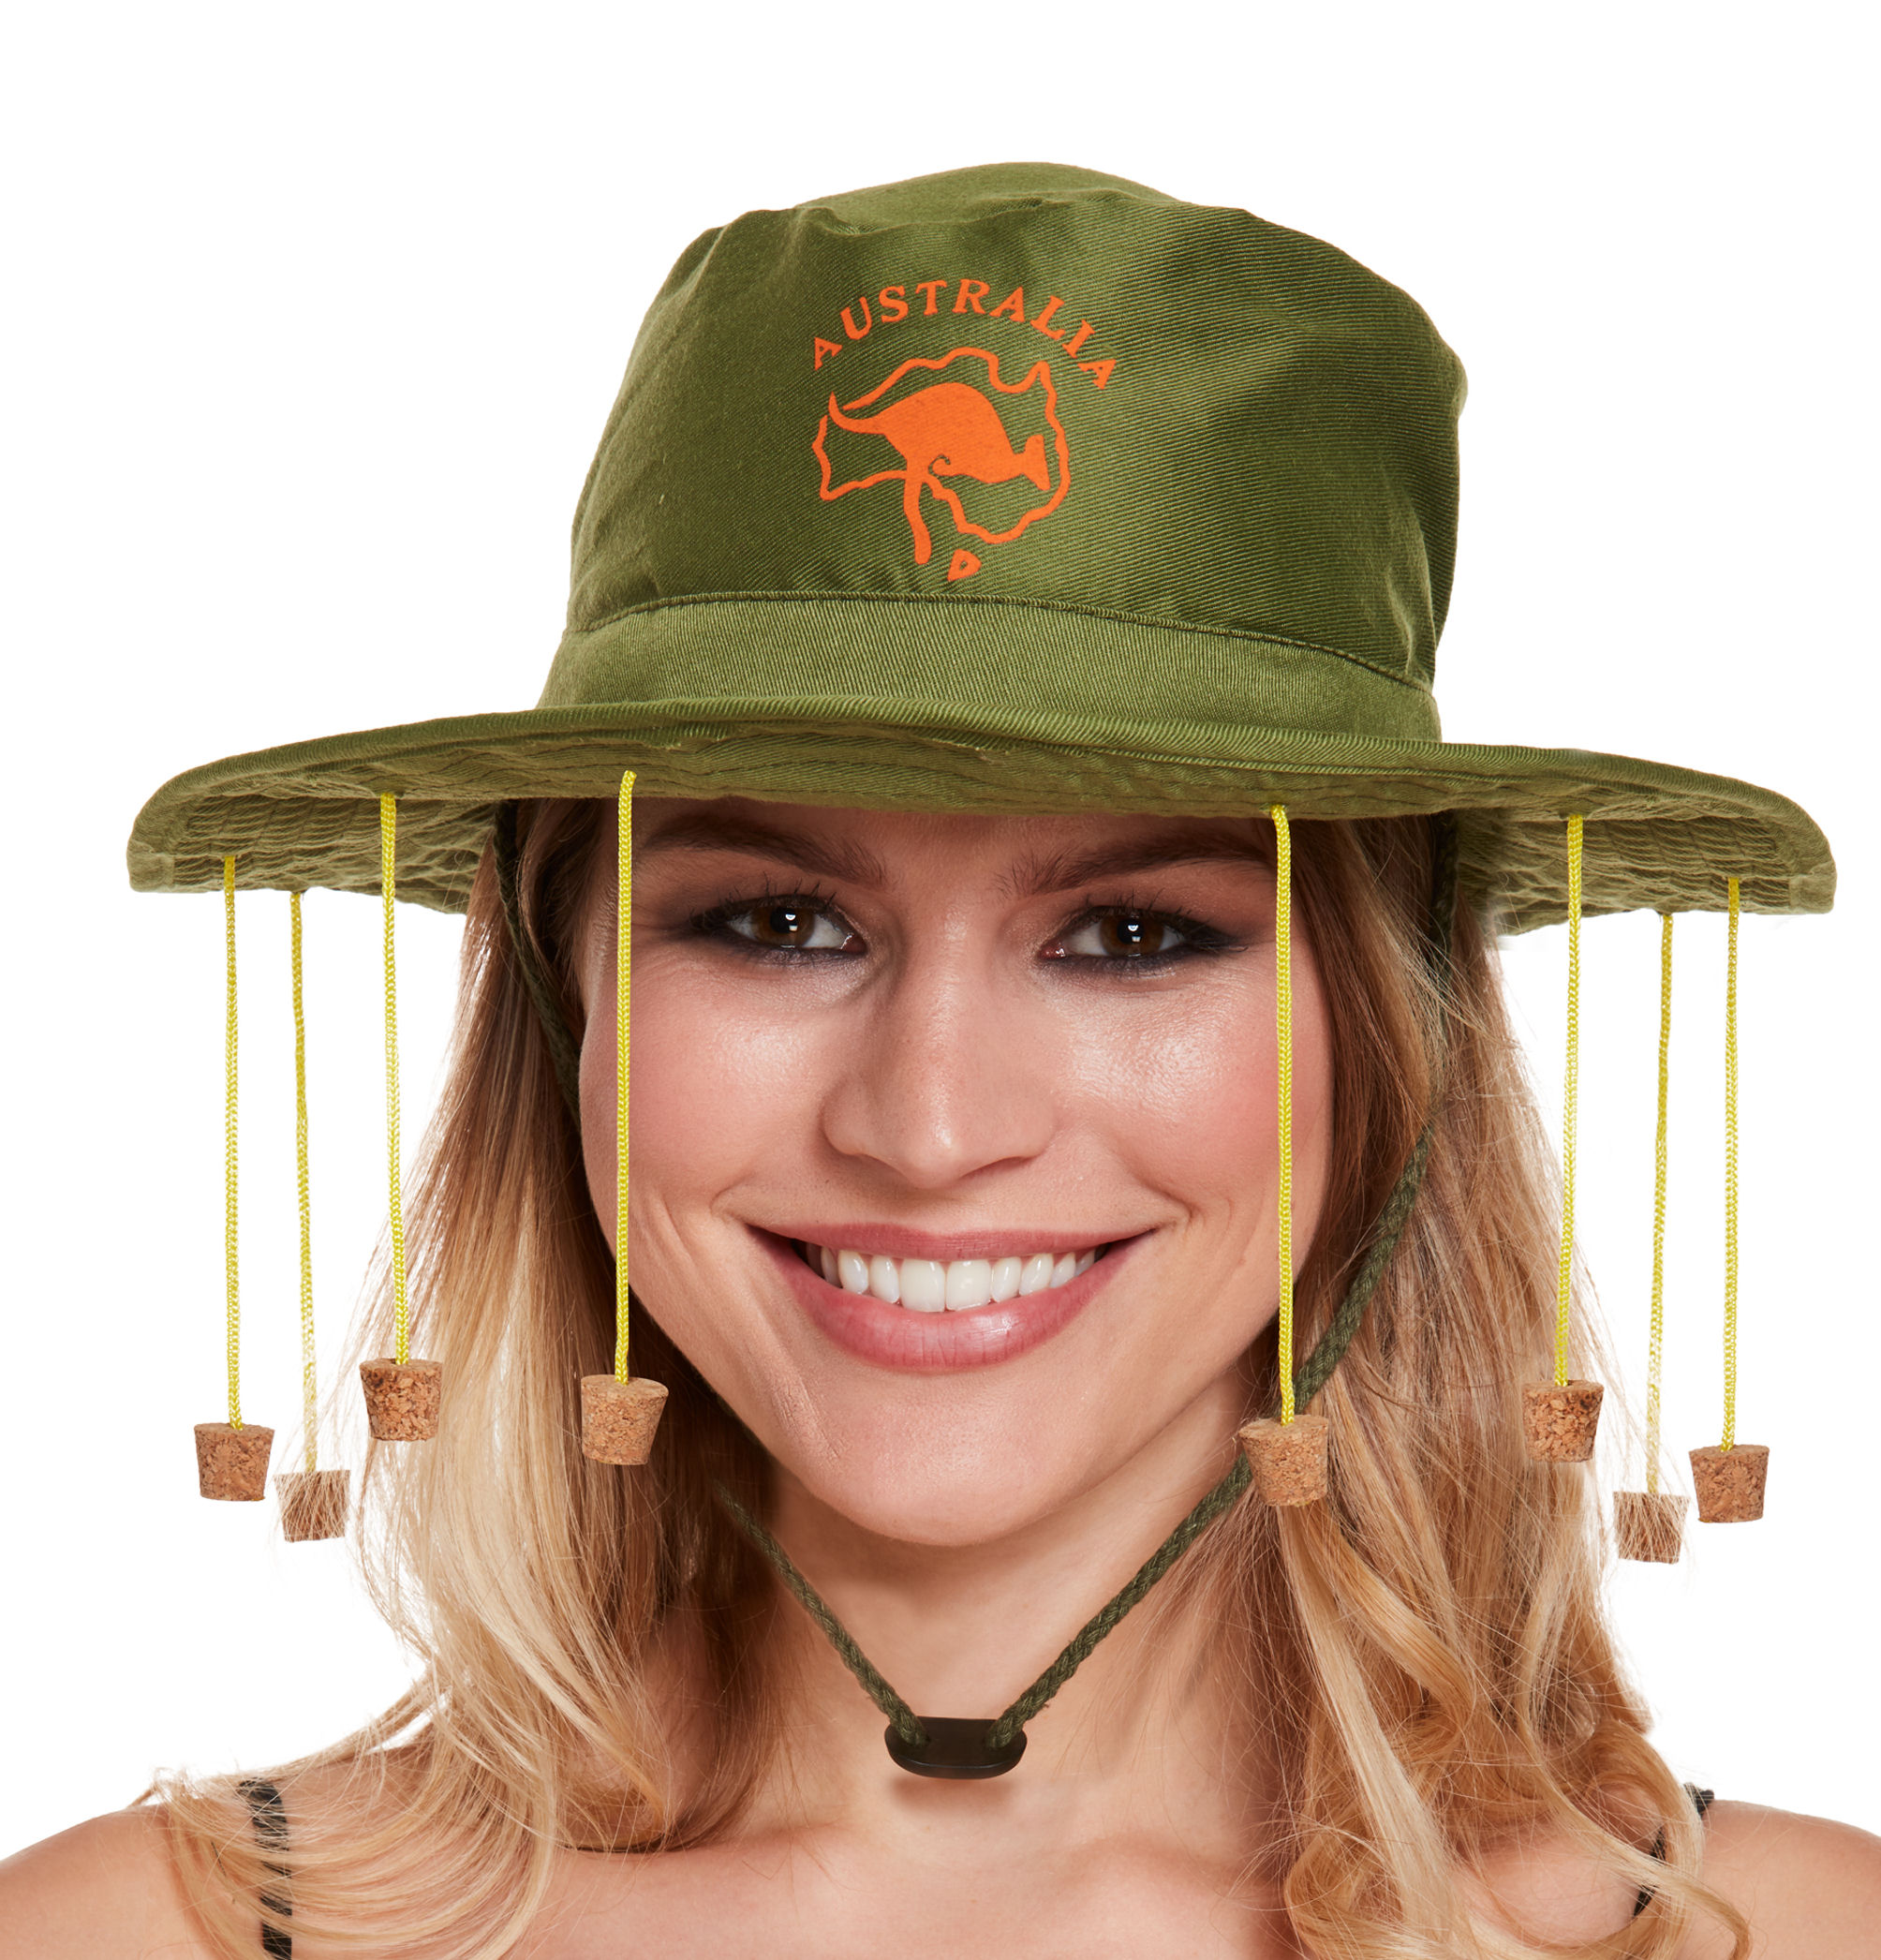 safari hat with corks